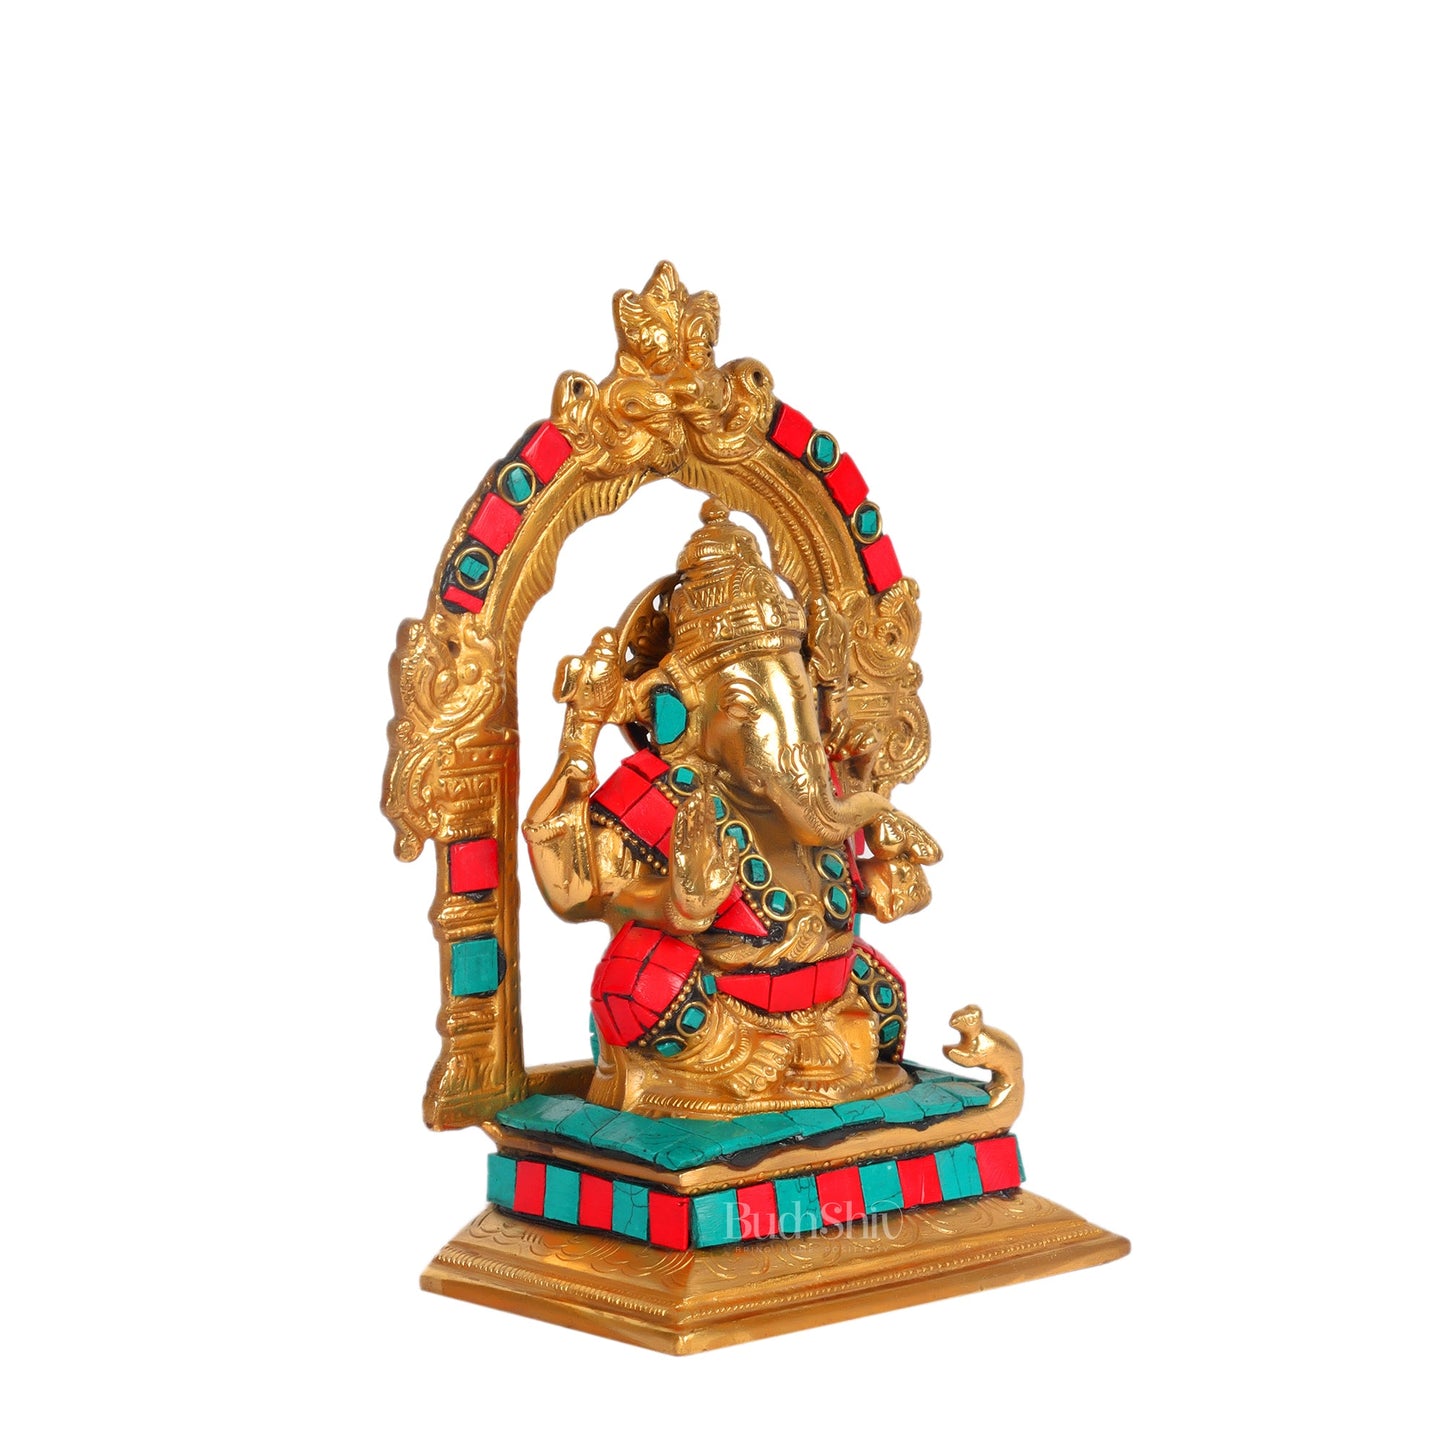 Beautiful Brass Ganesha Statue with Attached Prabhavali and Stonework - 7" Height - Budhshiv.com